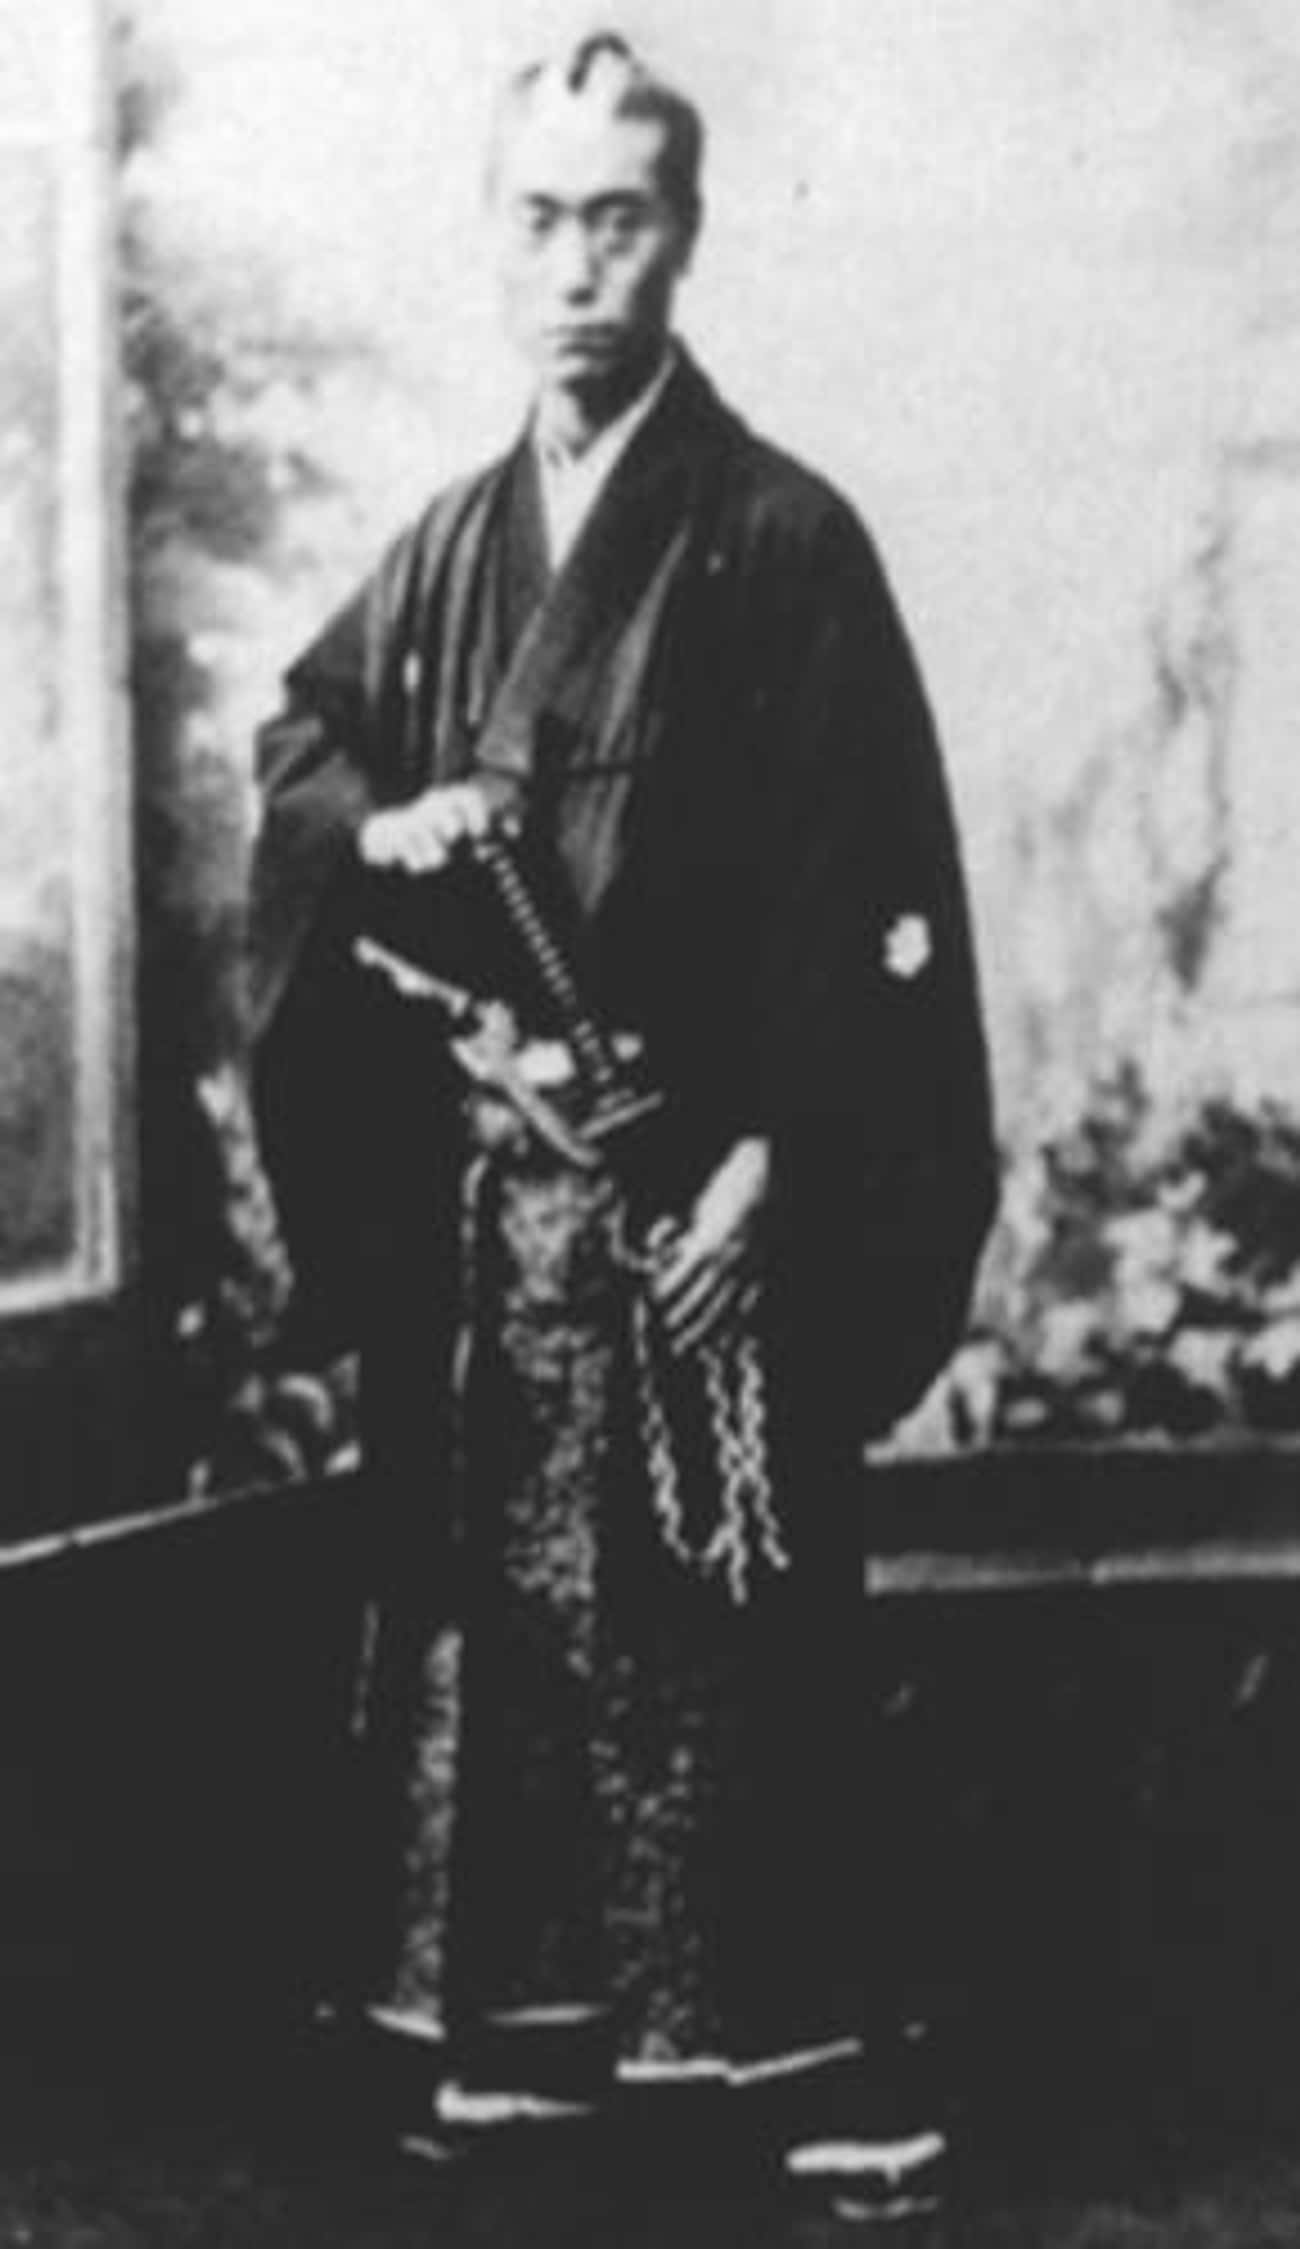 Yamanami Keisuke